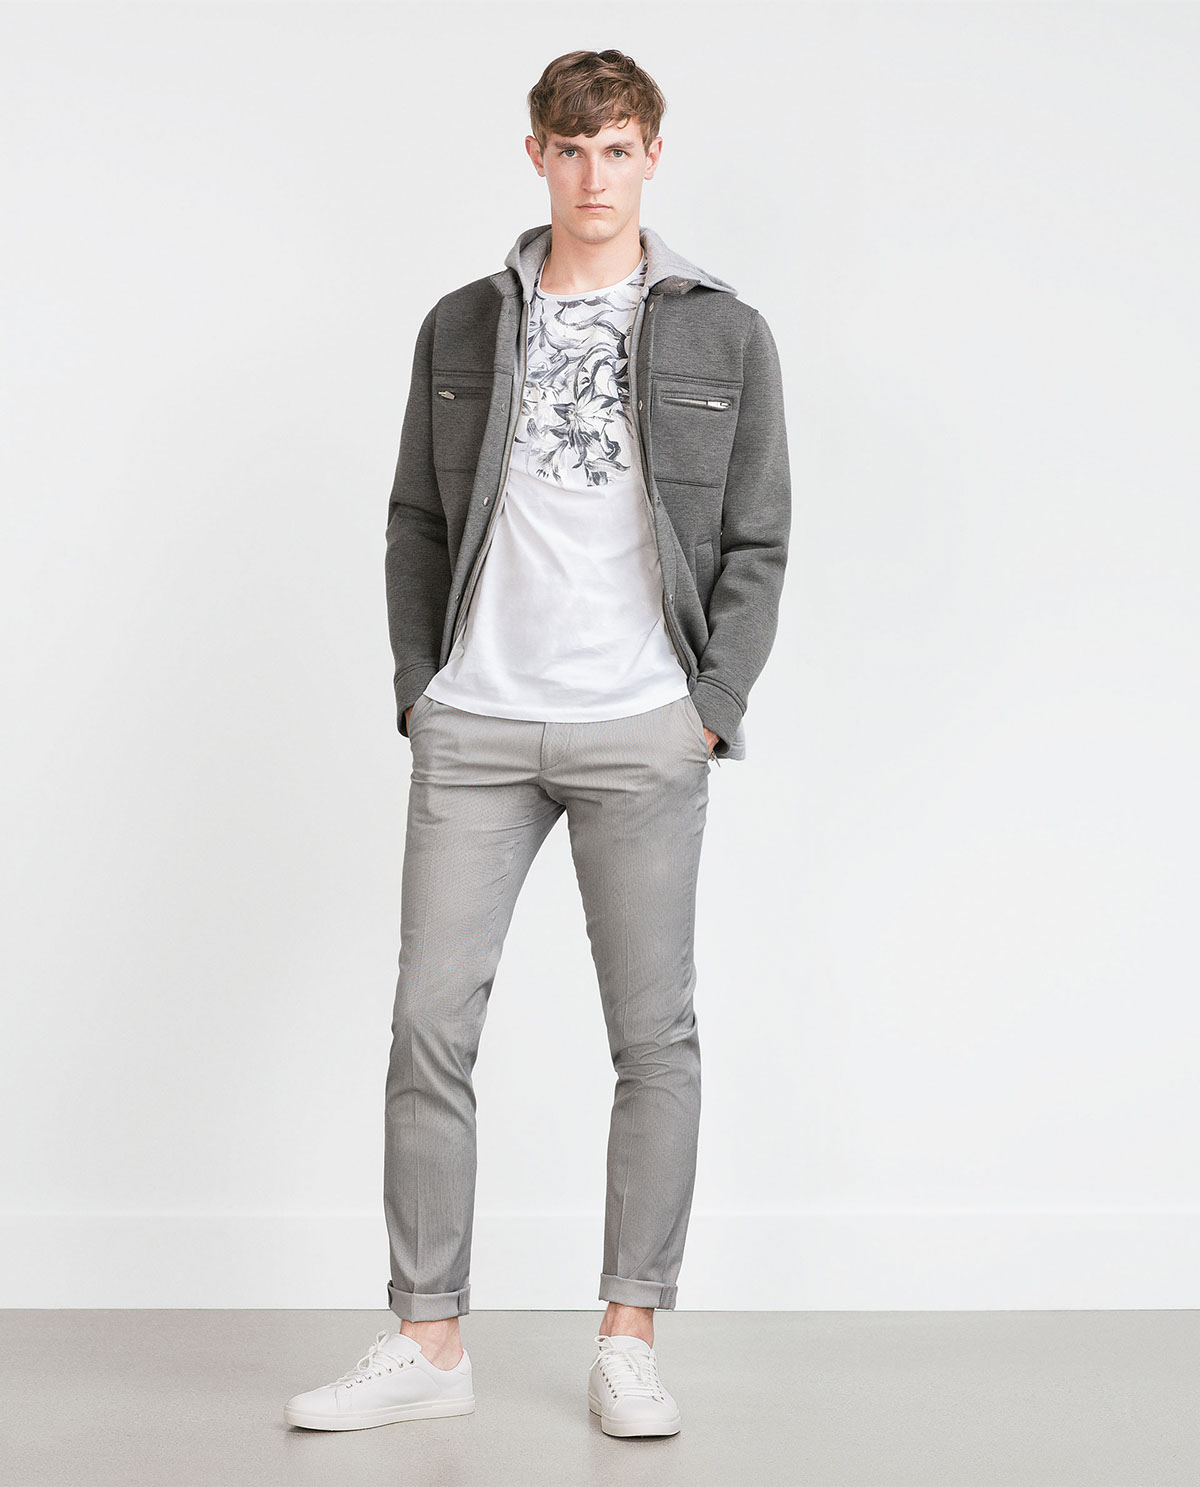 Zara man, 2015/16 New Collection! on 